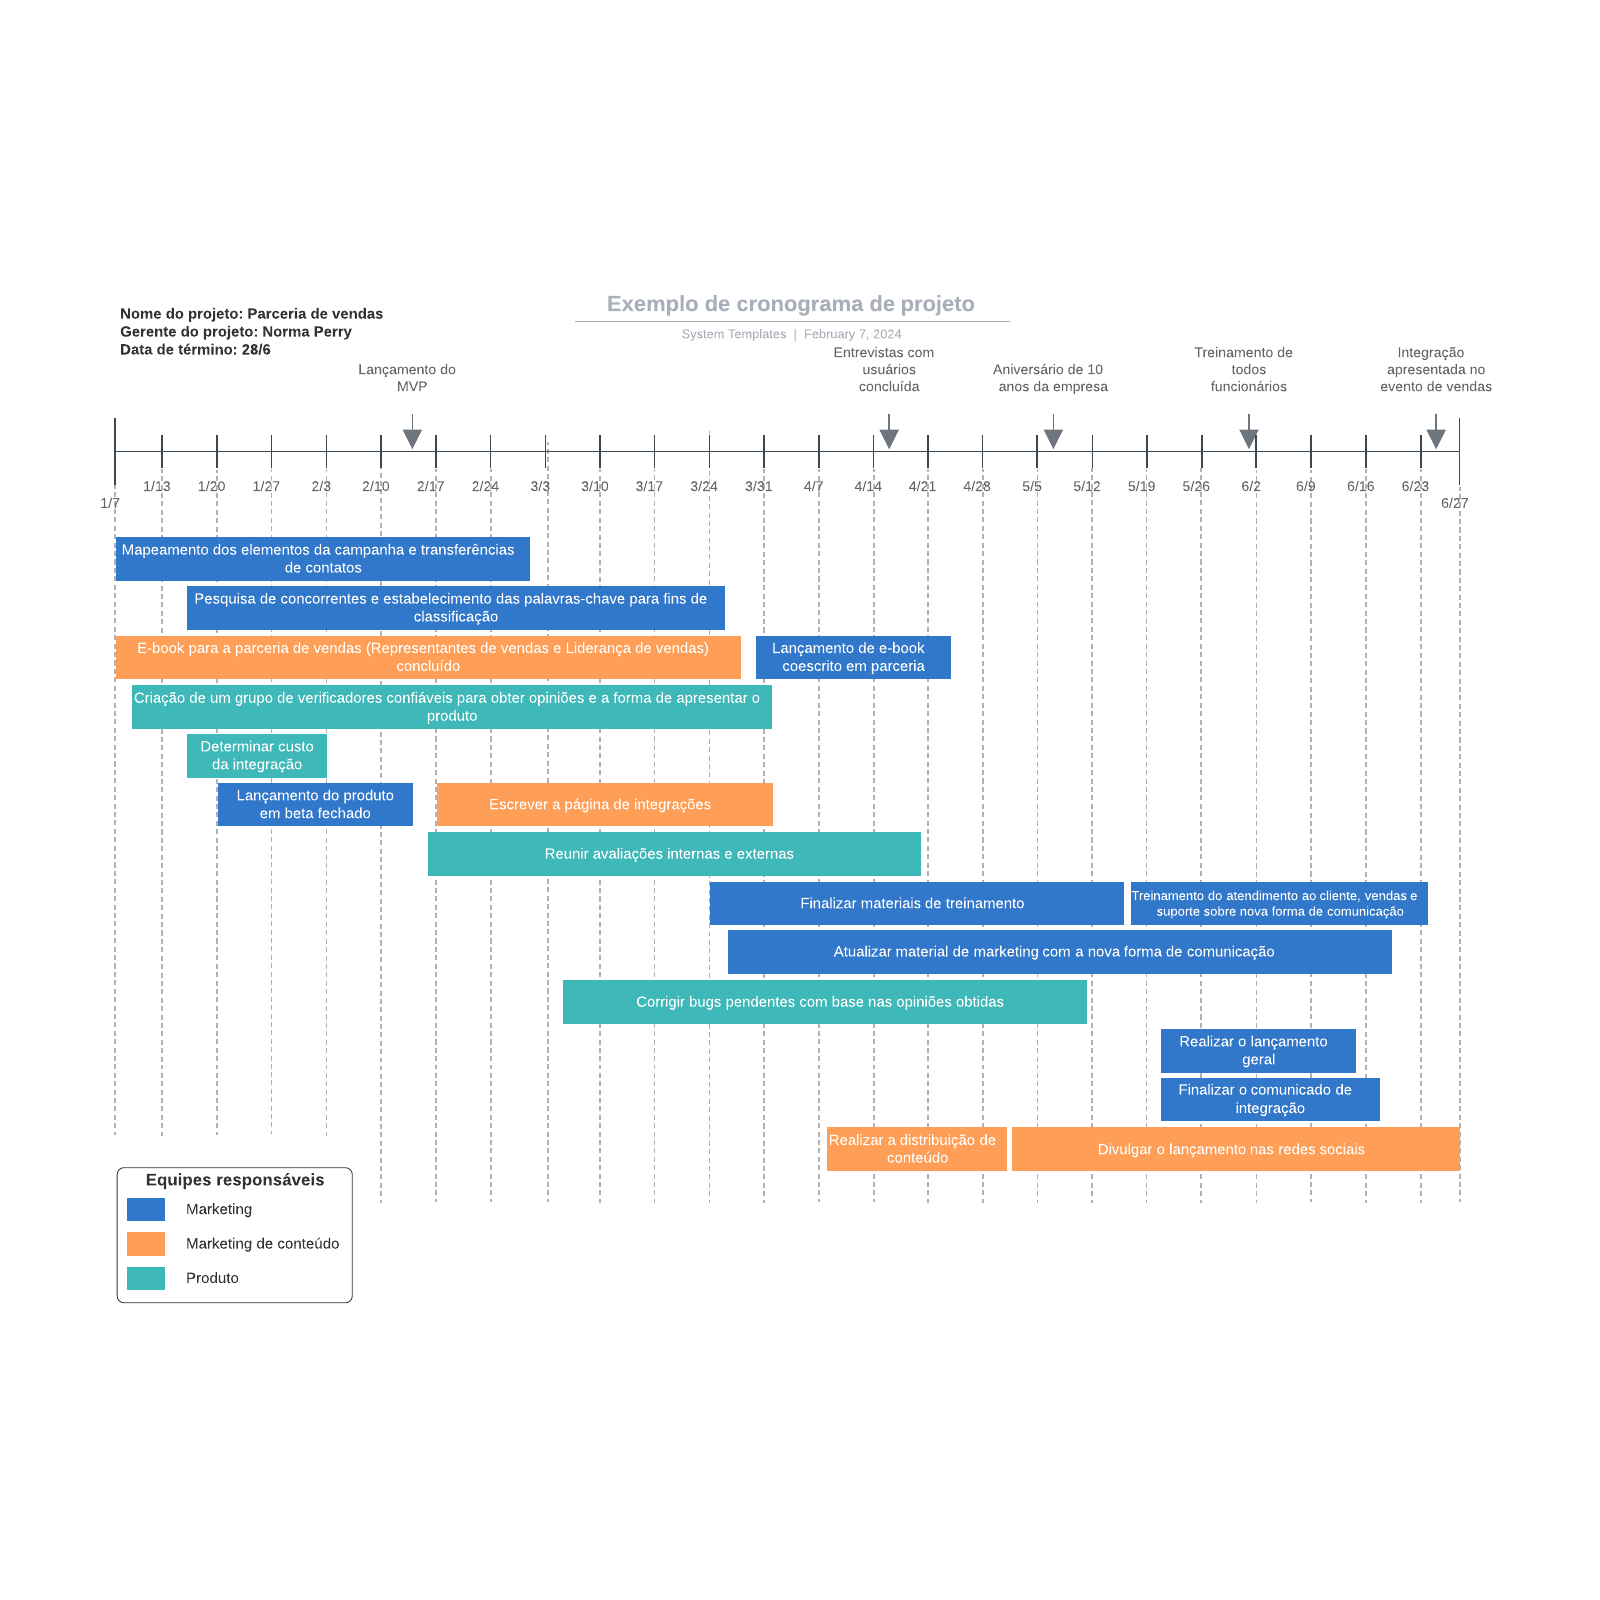 Exemplo de cronograma de projeto example